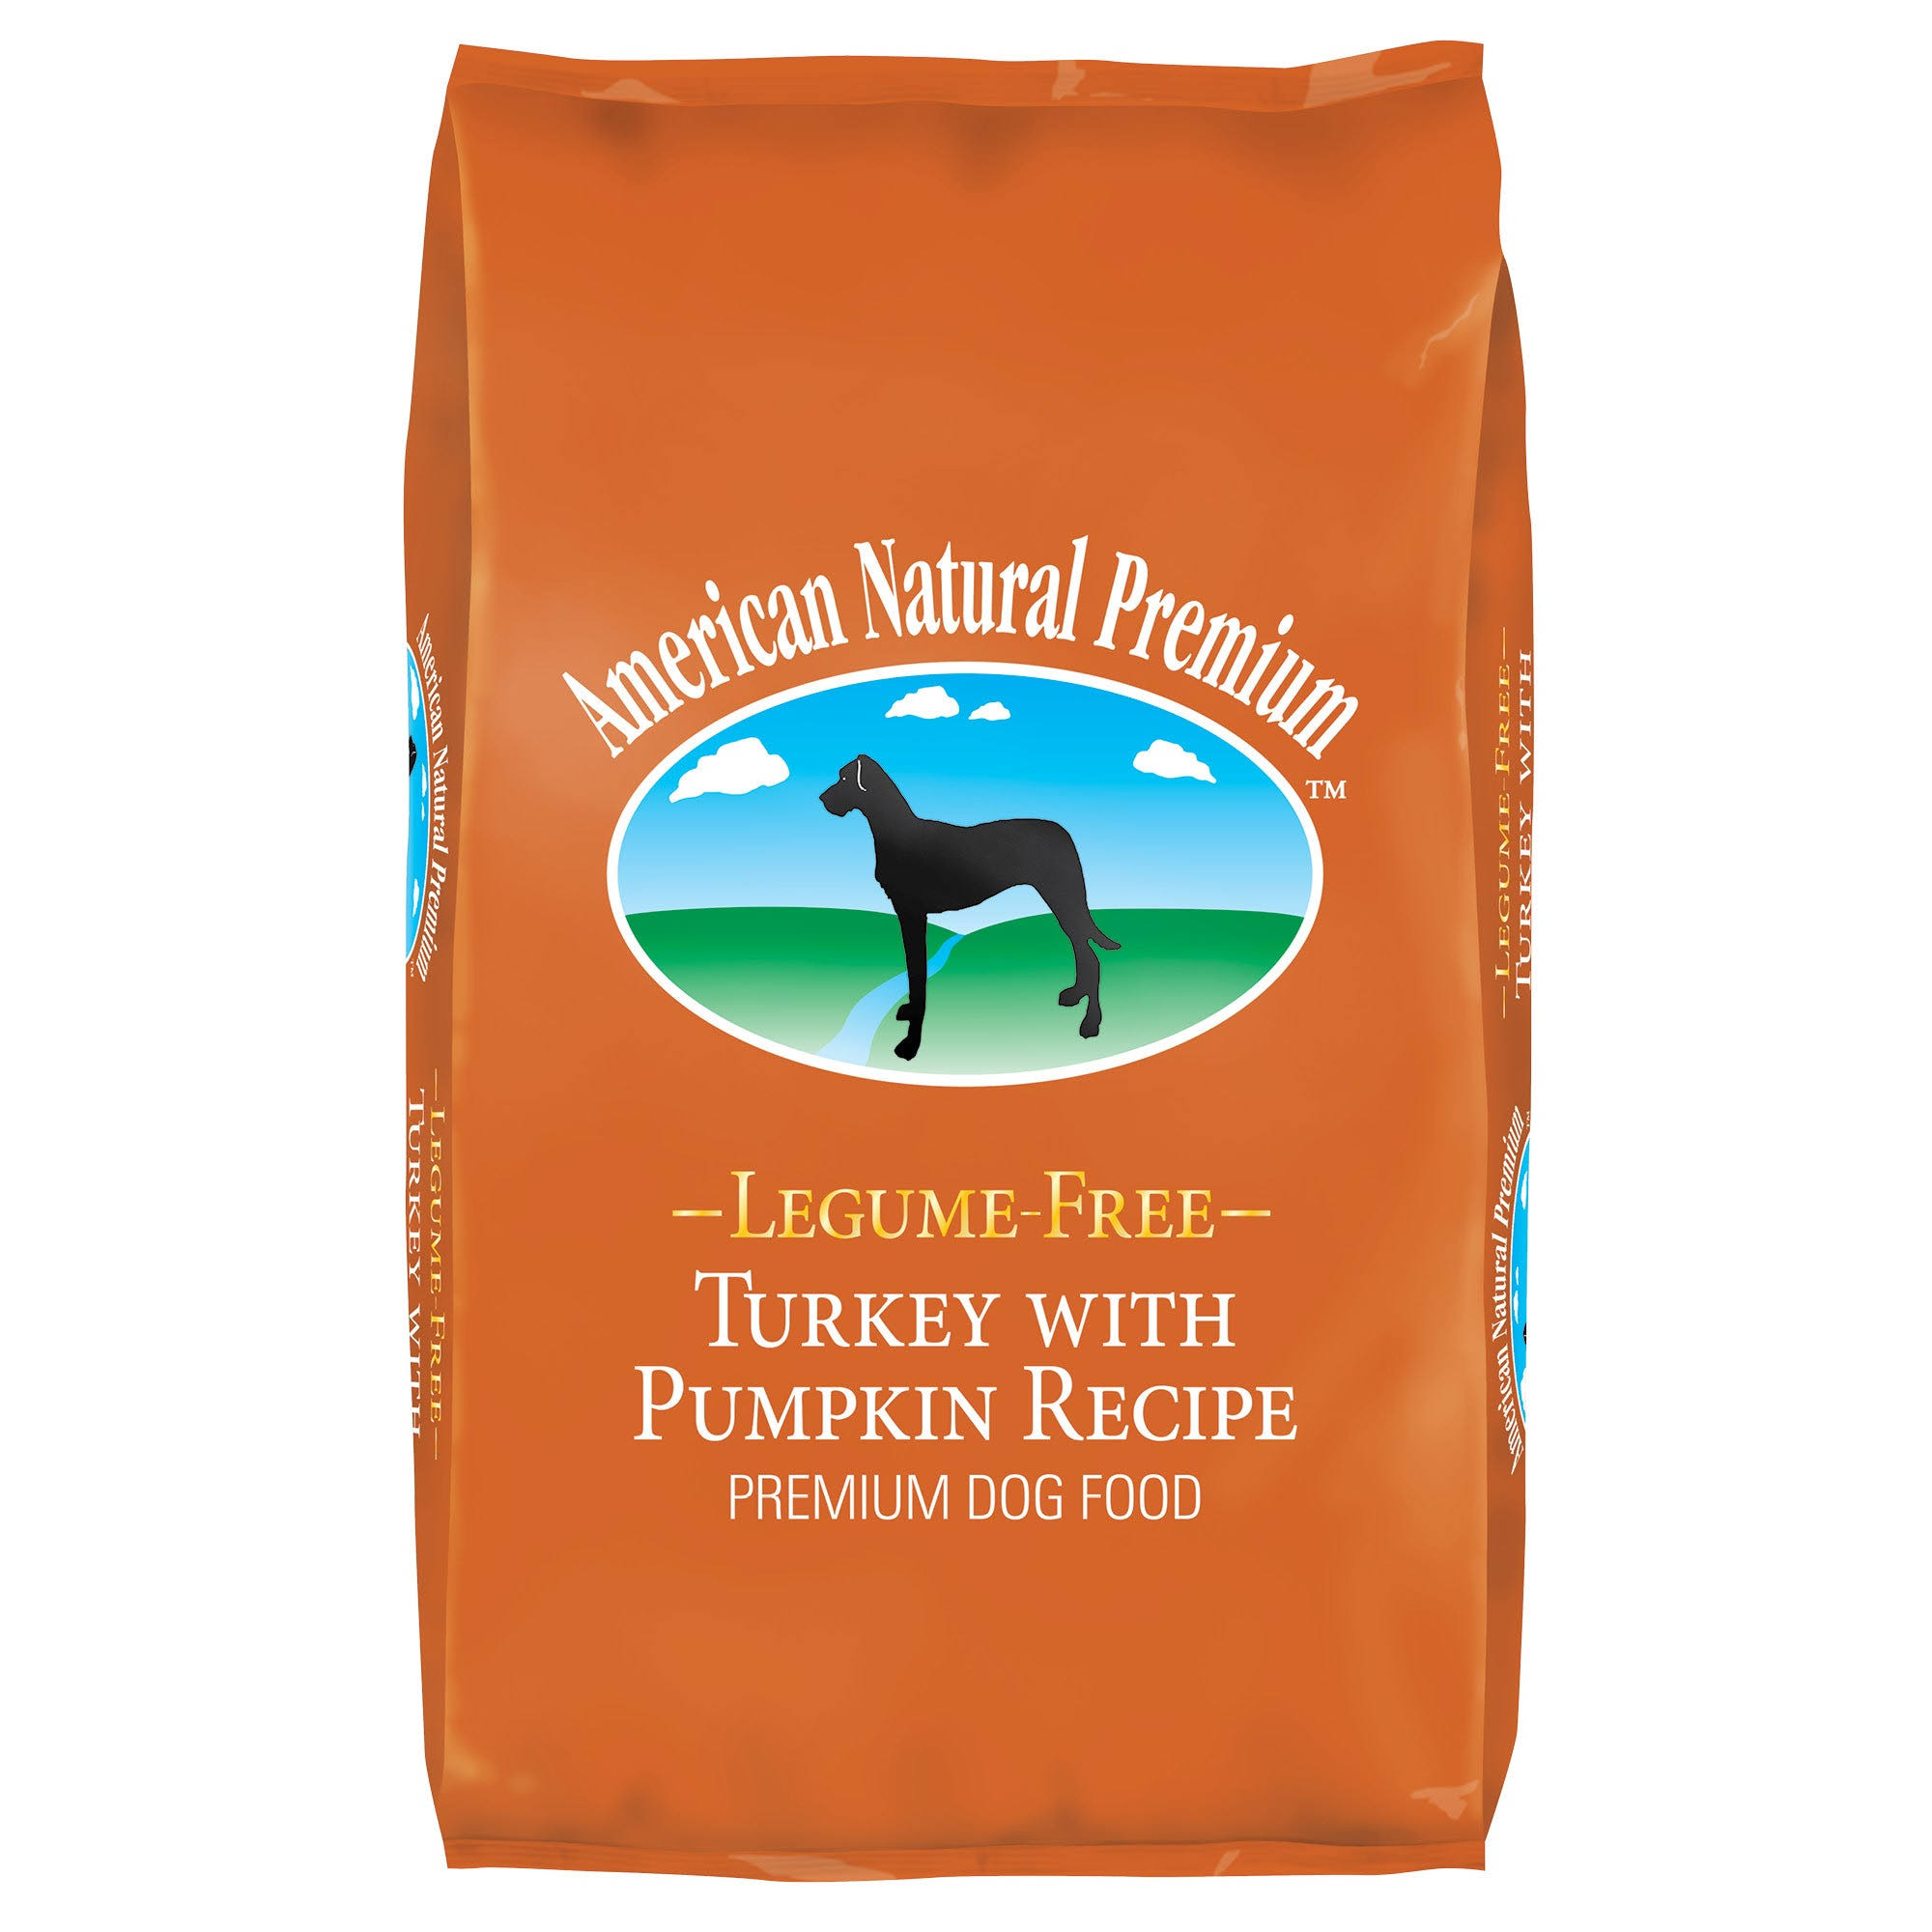 American Natural Premium Turkey with Pumpkin Recipe Legume-Free Premium Dry Dog Food 30lb Bag